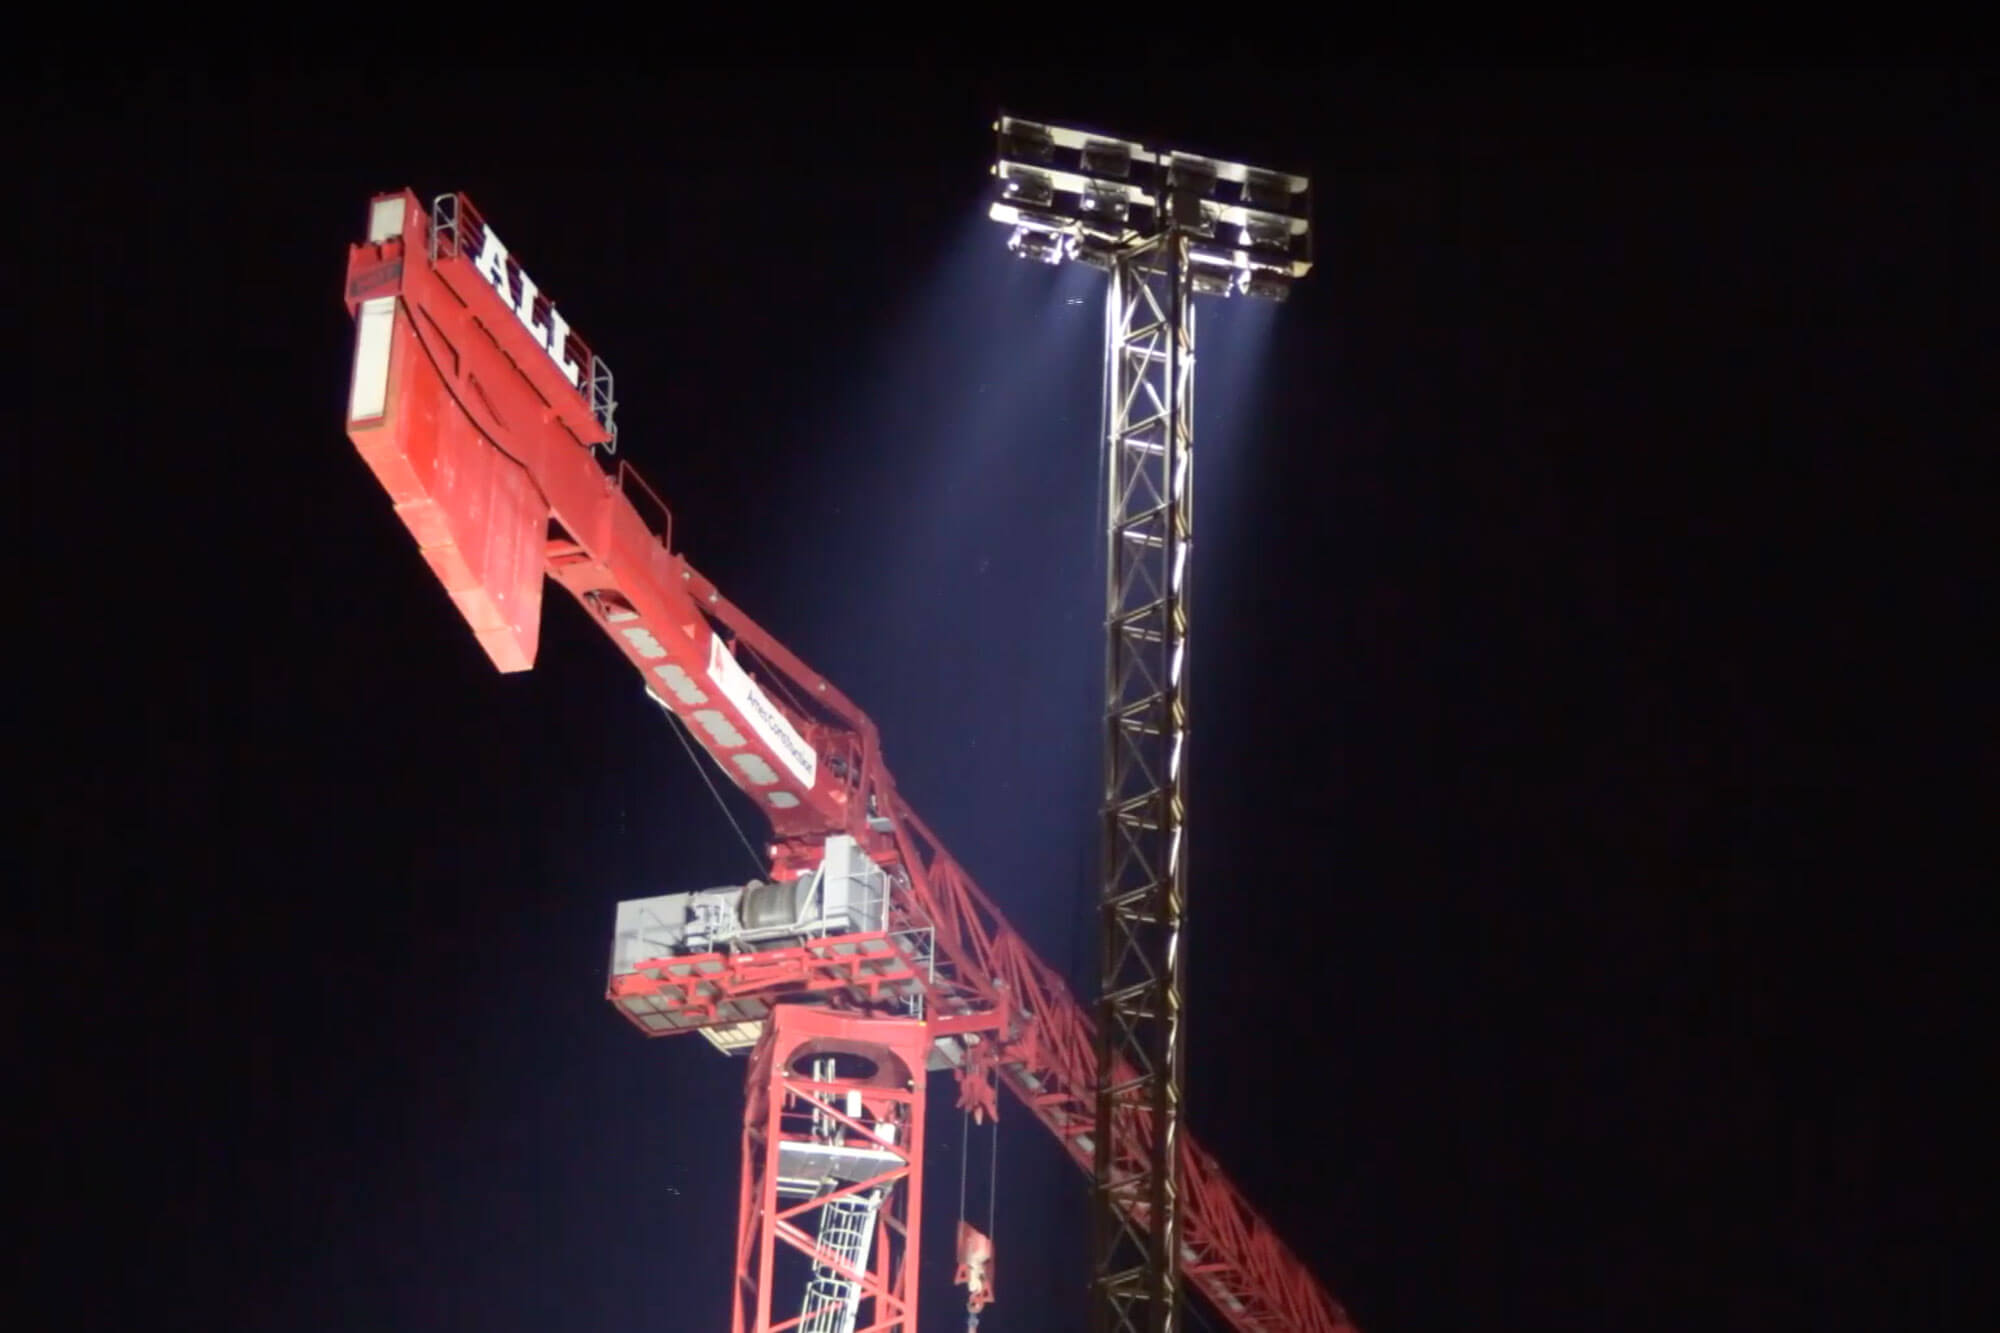 Tower lighting up a crane